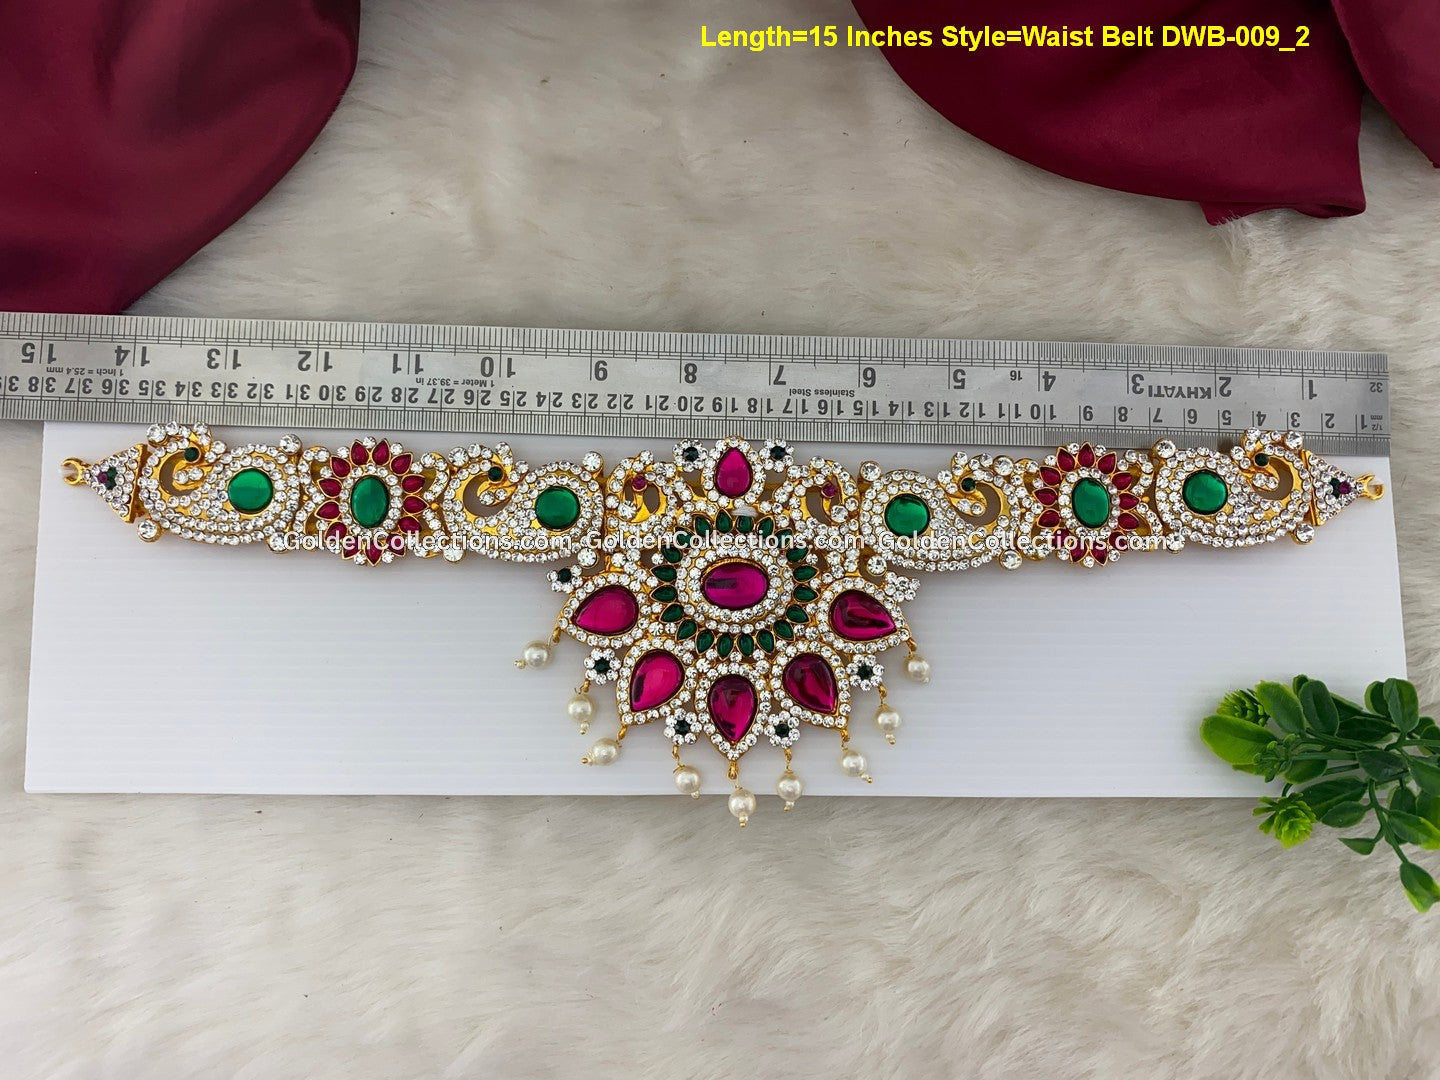 Decorative Waist Belt for Religious Idols-Graceful Adornments - DWB-009 2